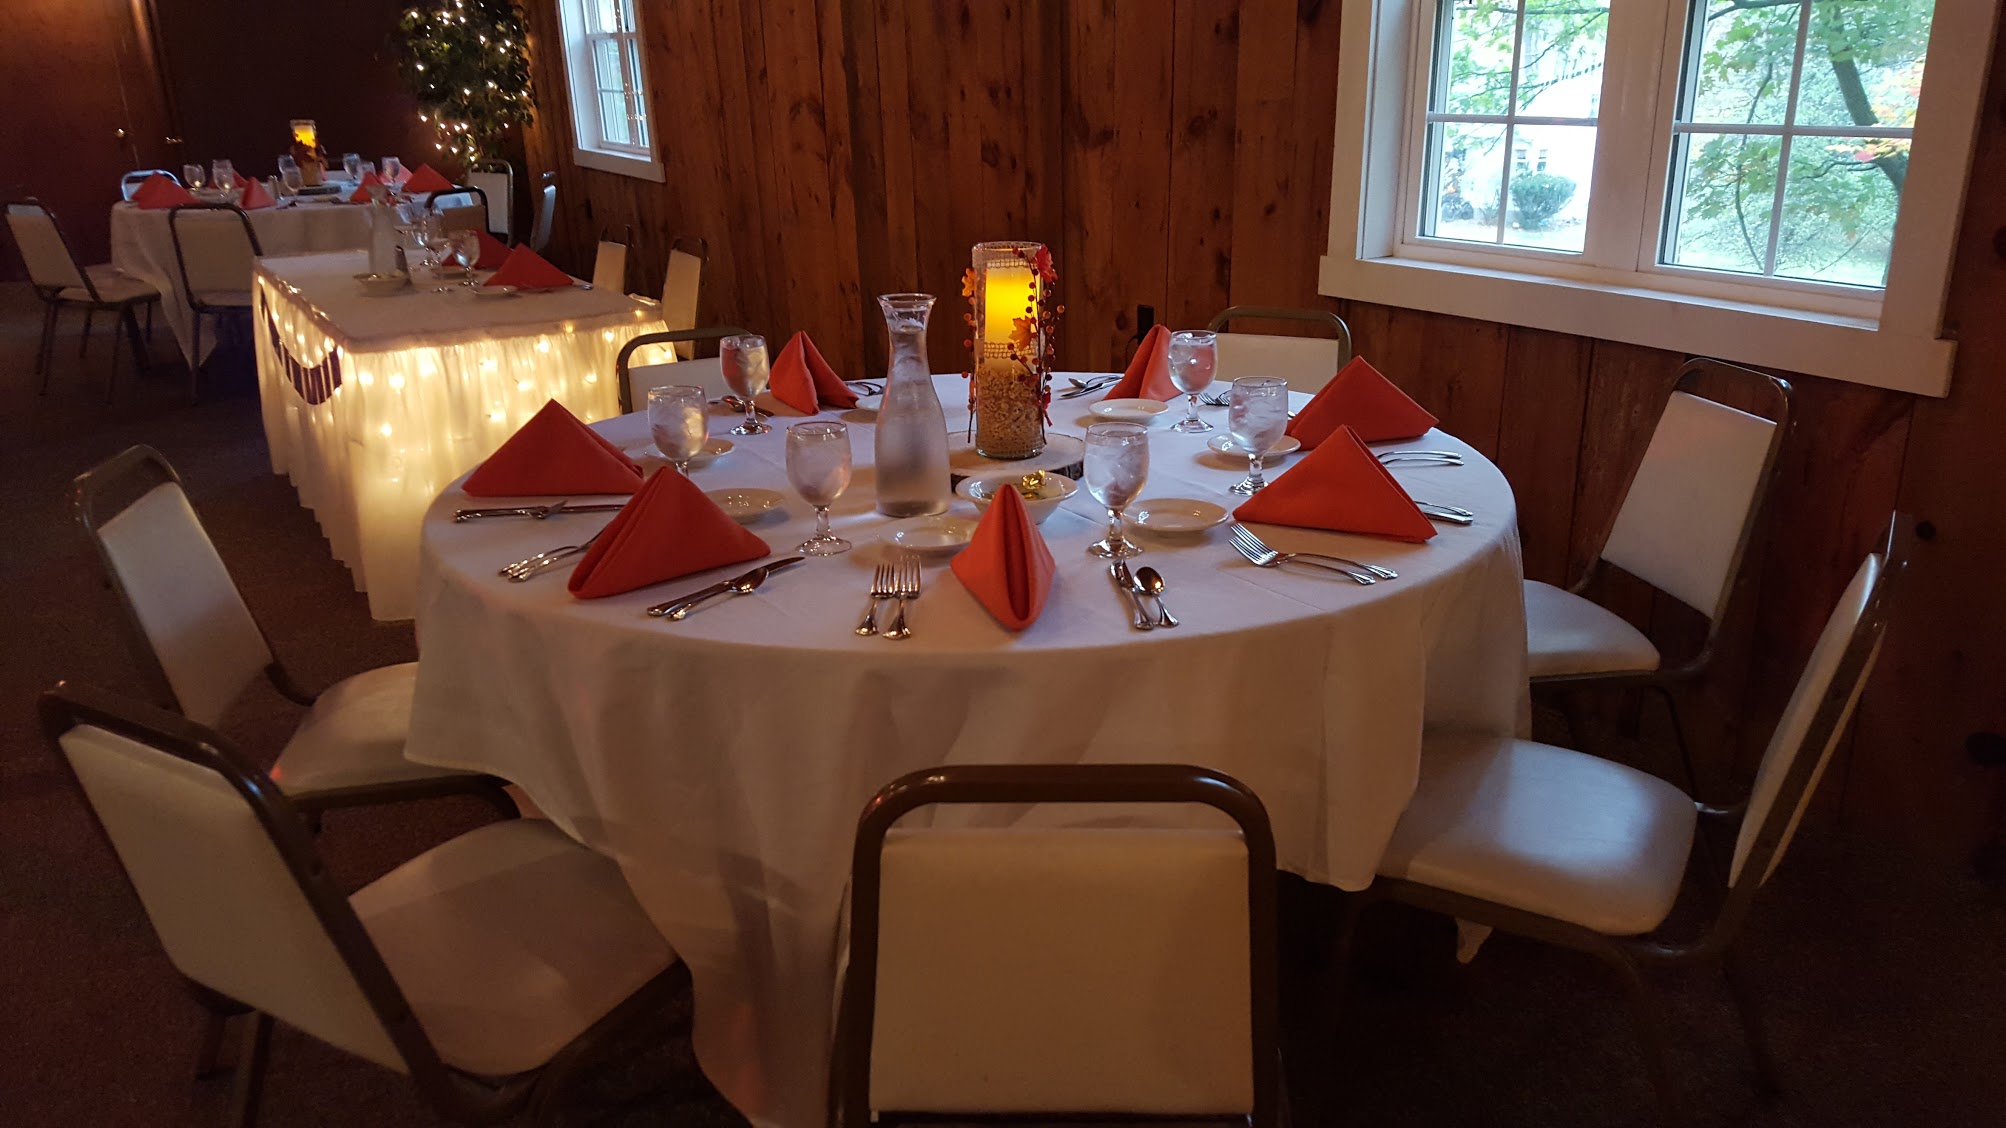 Table at wedding reception